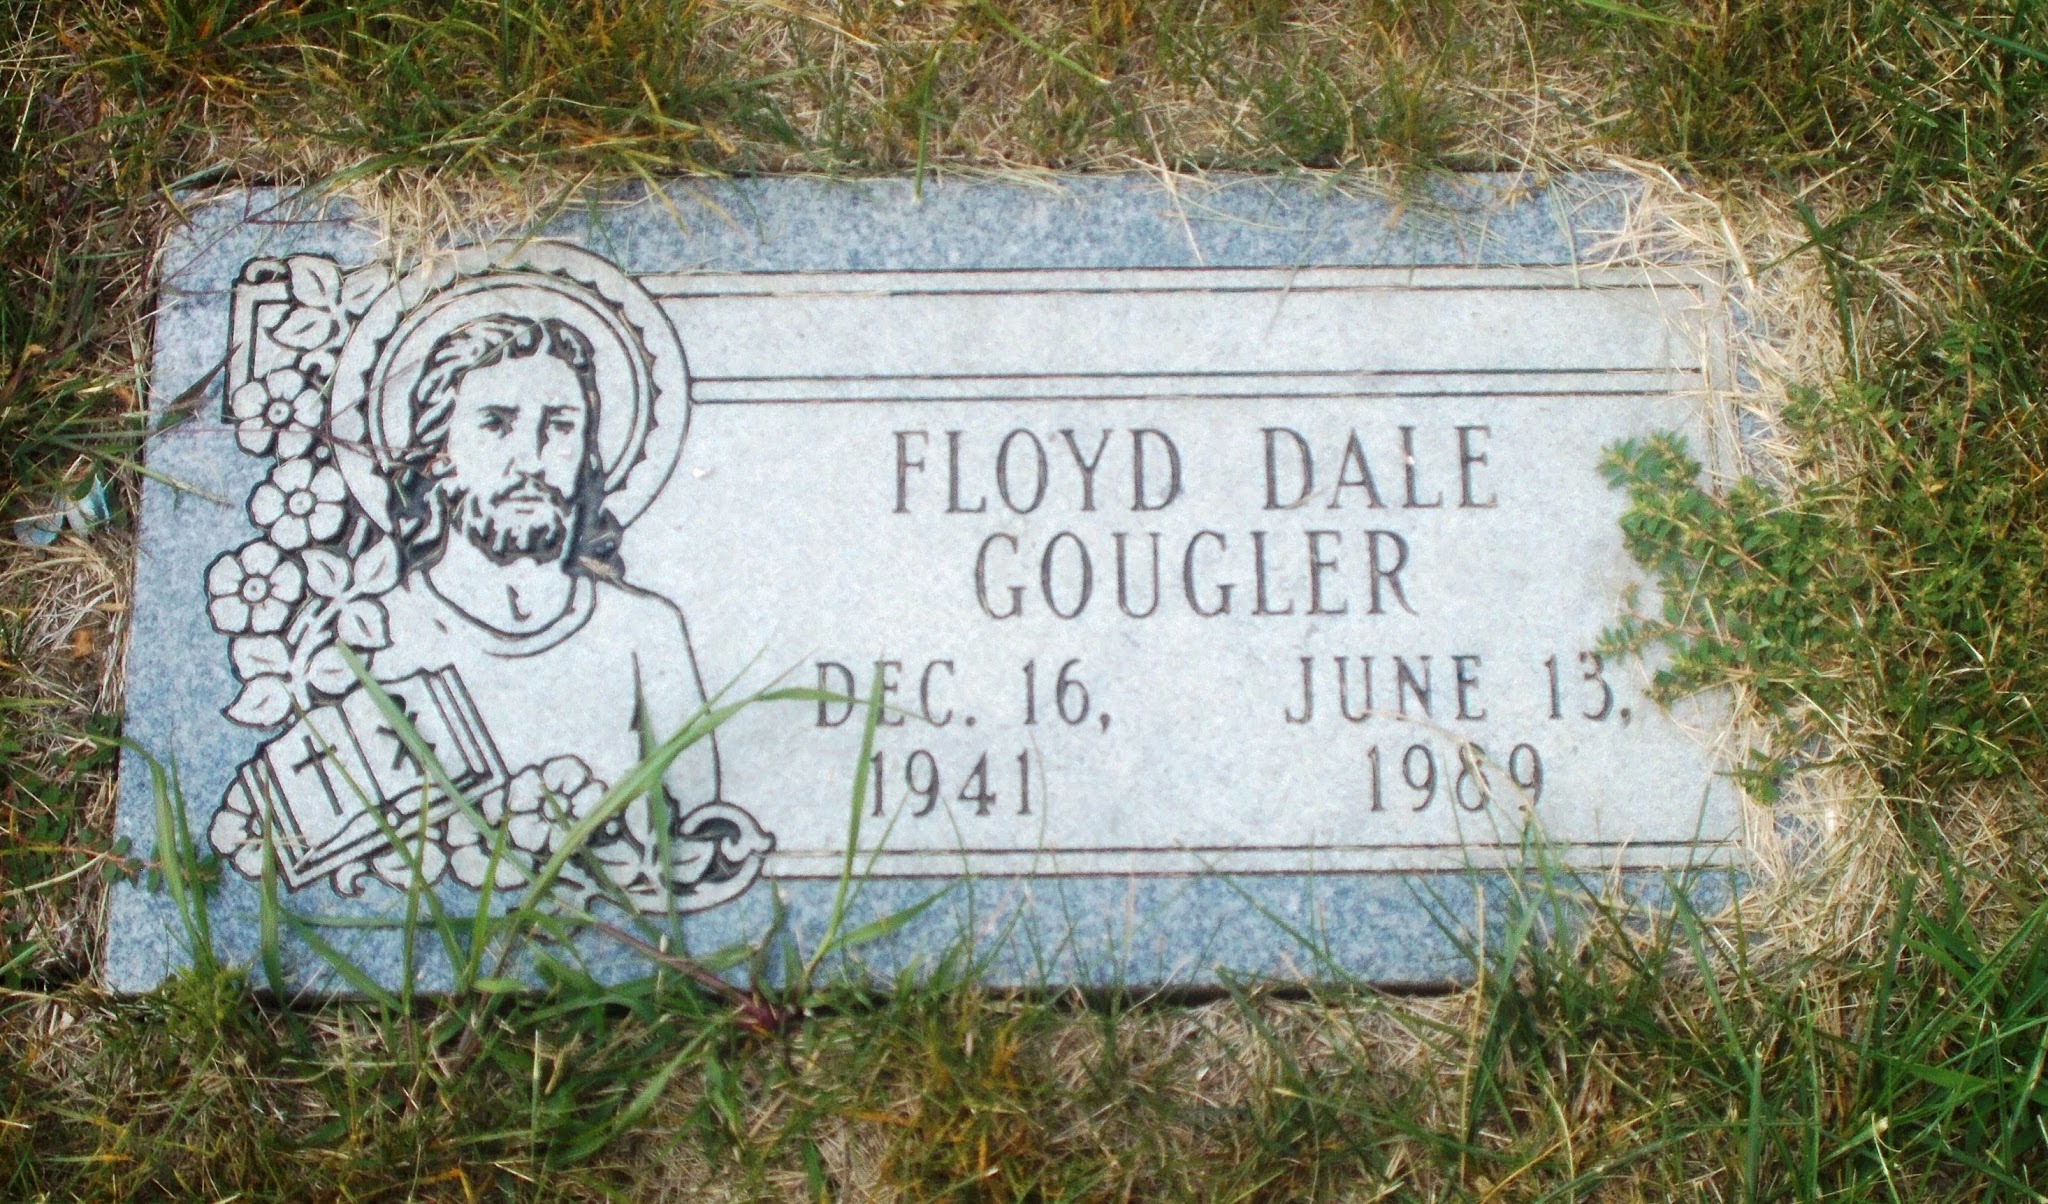 Floyd Dale Gougler